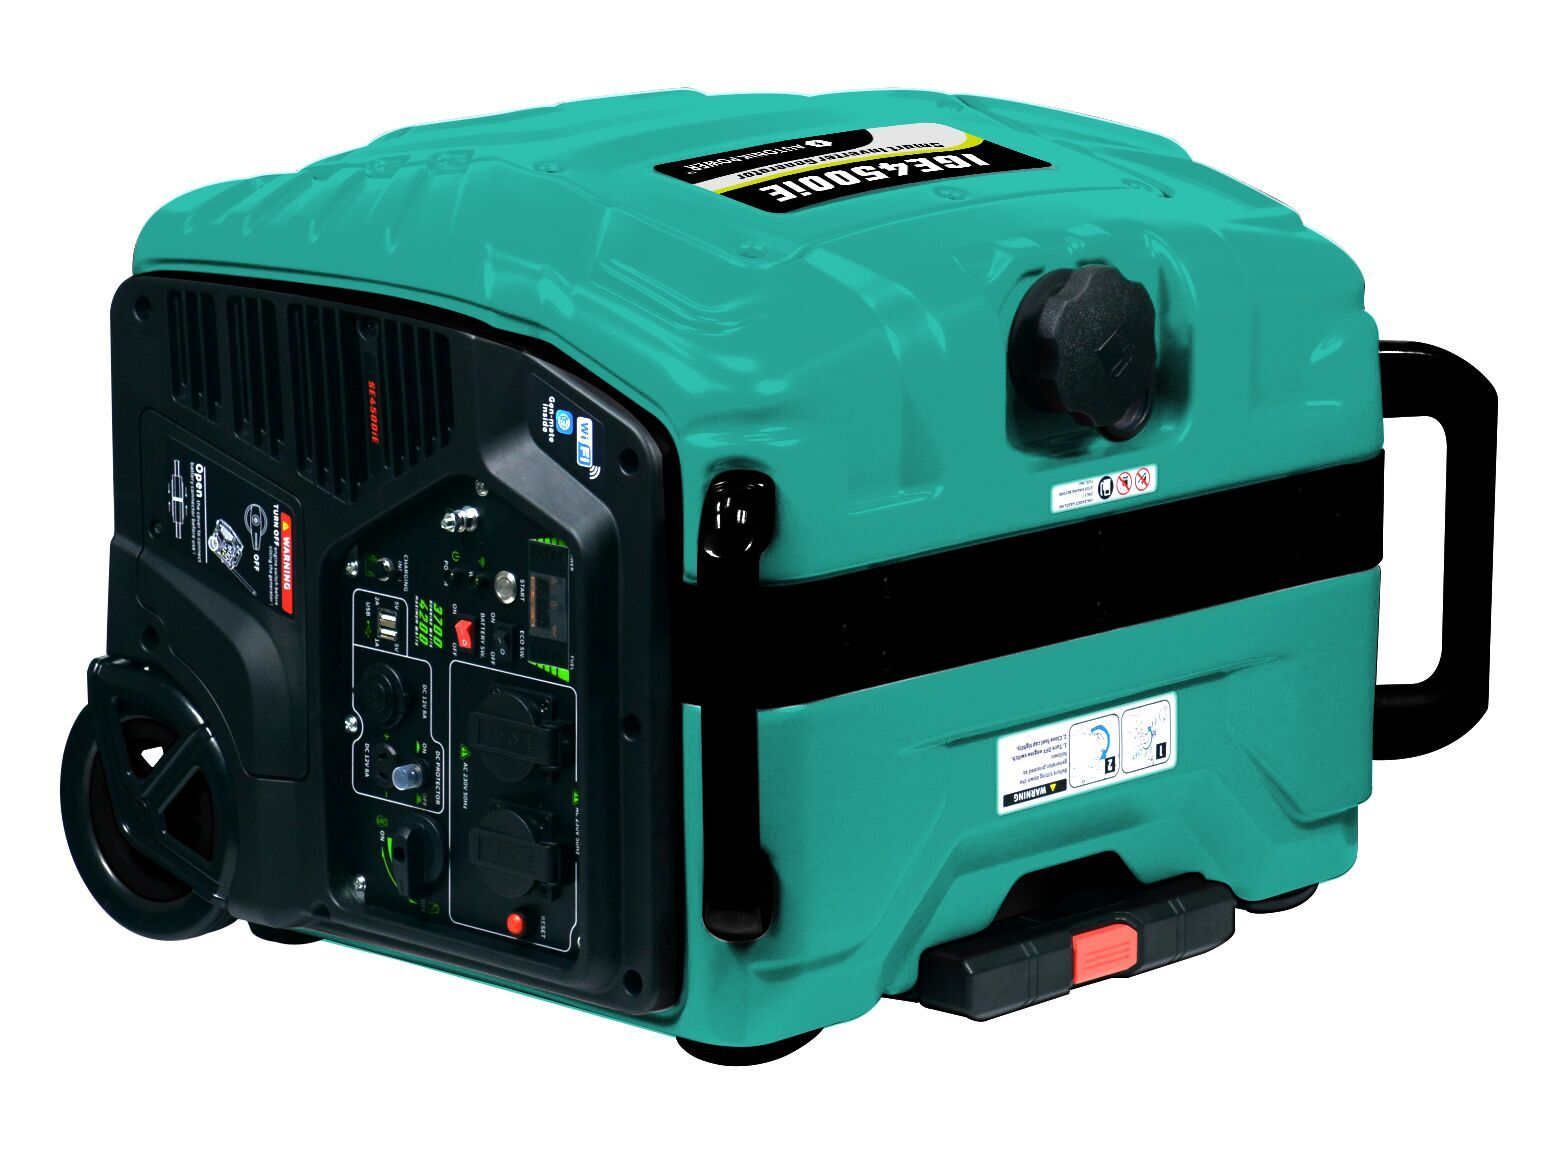 Energy-Saving Digital 4500W Generator, 4-Stroke, Fuel Type Gasoline, Lightweight Super Quiet Home Generator Portable Inverter Generator